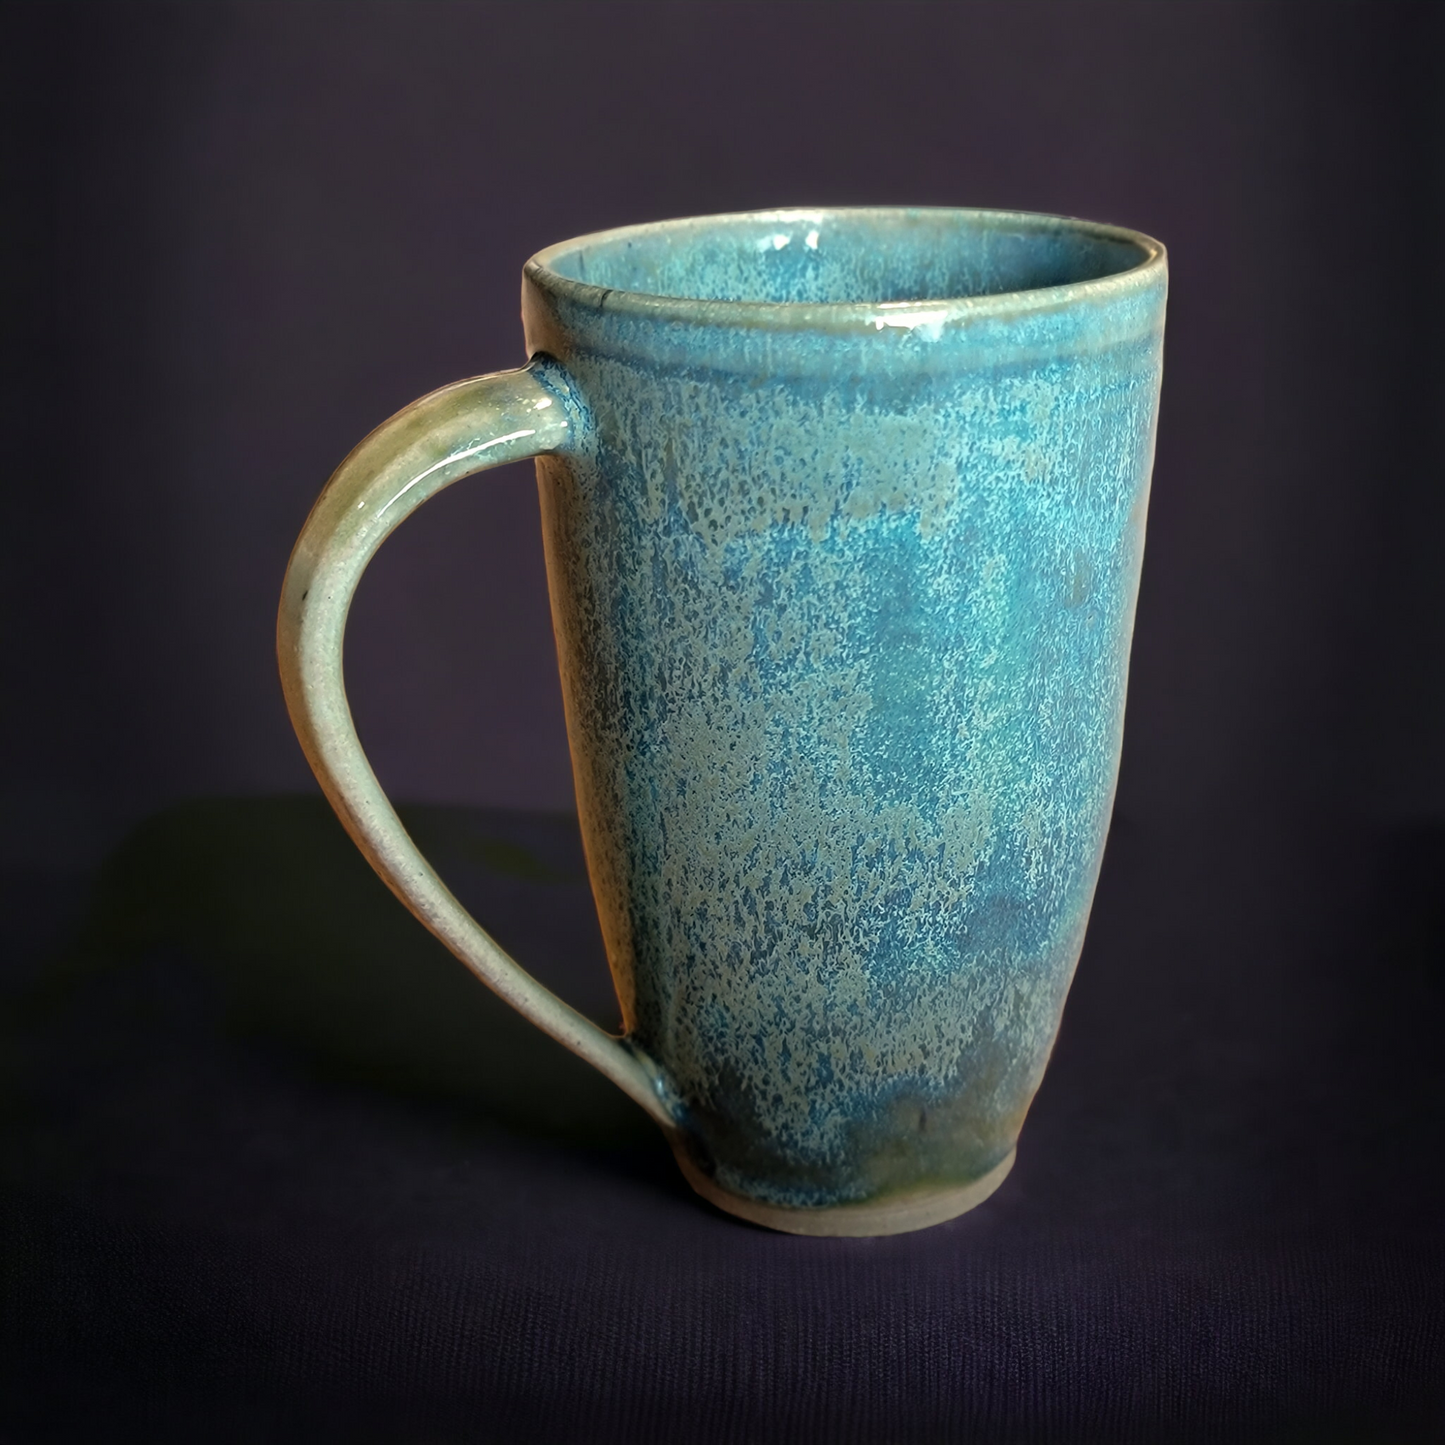 Turquoise and Green Mug - #48 - SOLD